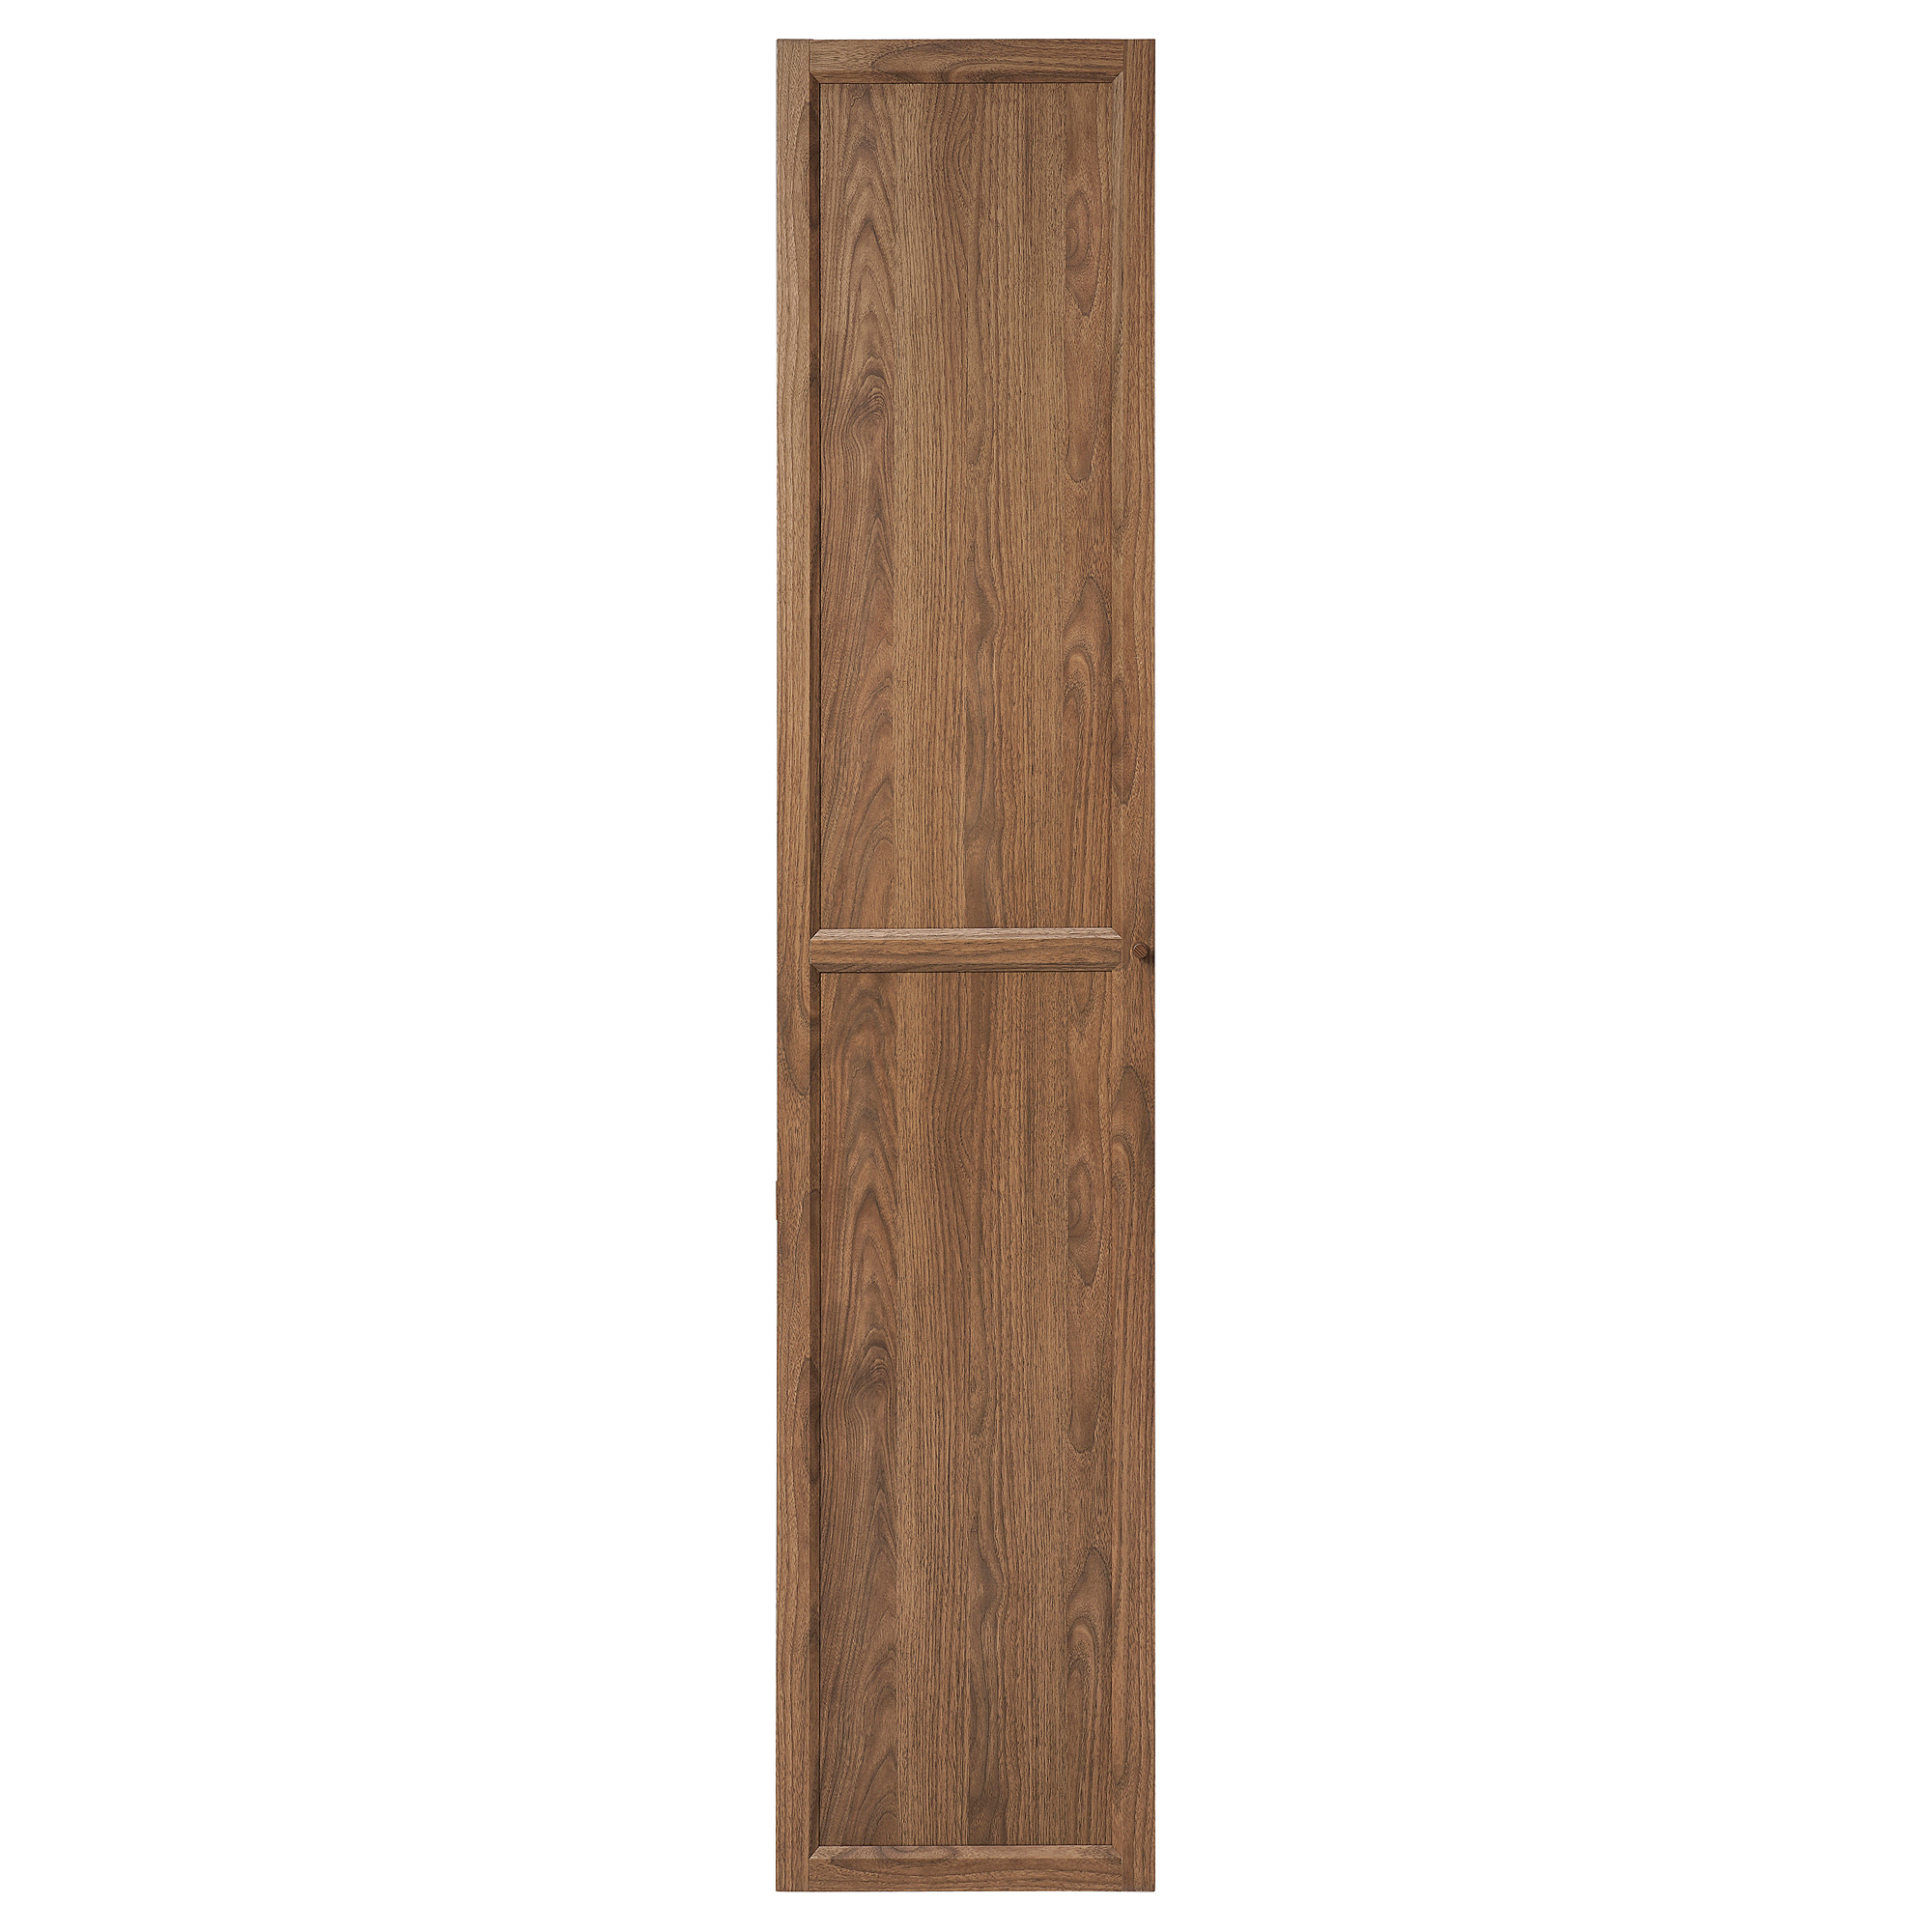 OXBERG - 櫃門, 褐色胡桃木紋, 40x192 厘米| IKEA 香港及澳門